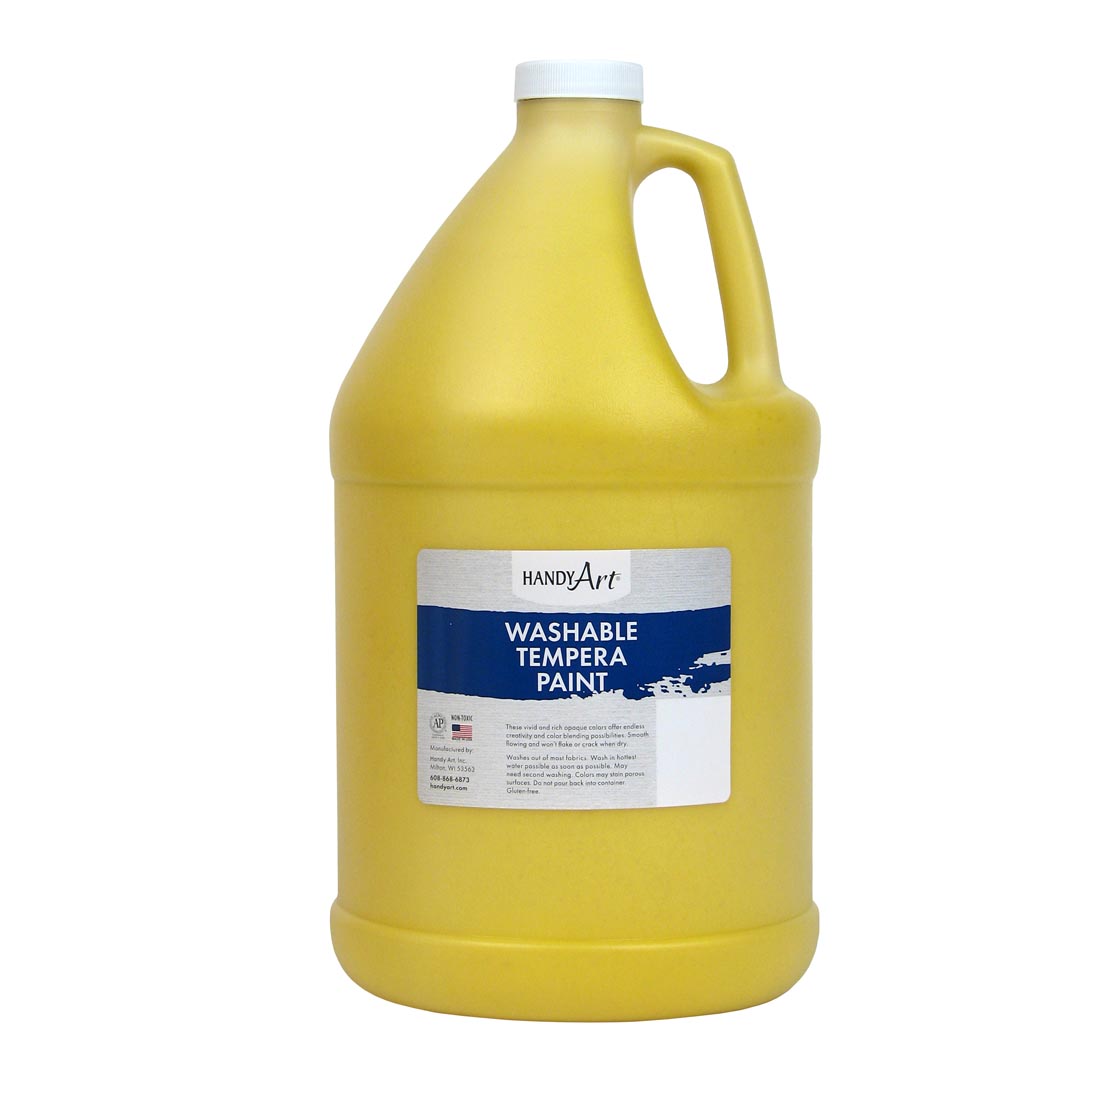 Gallon of Yellow Handy Art Washable Tempera Paint